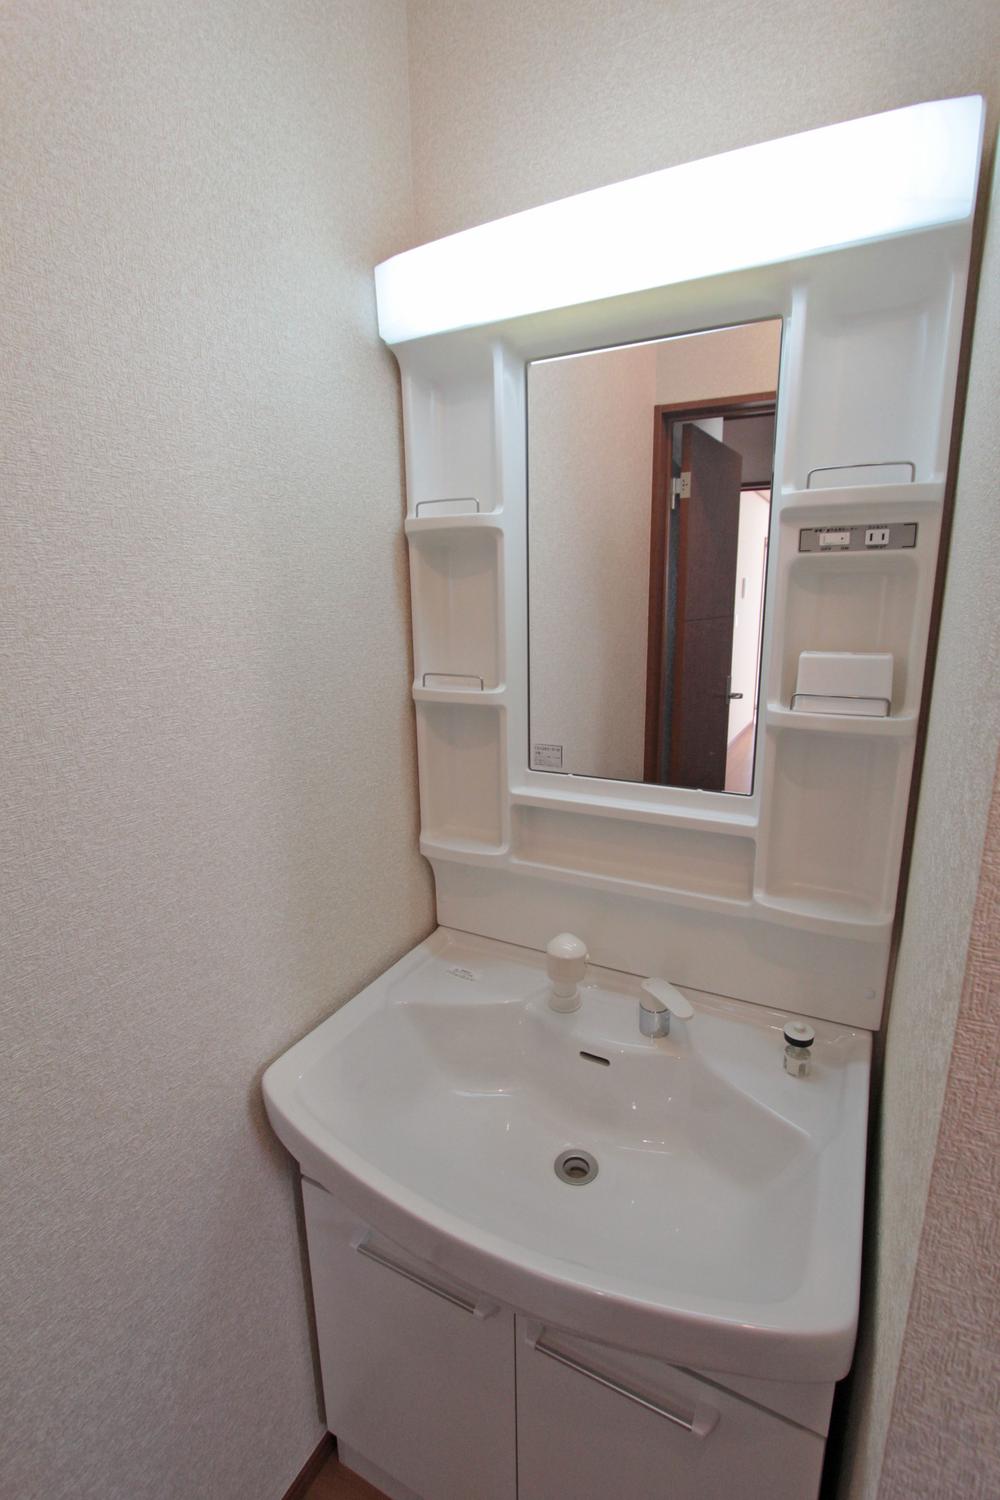 Wash basin, toilet. Interior construction results